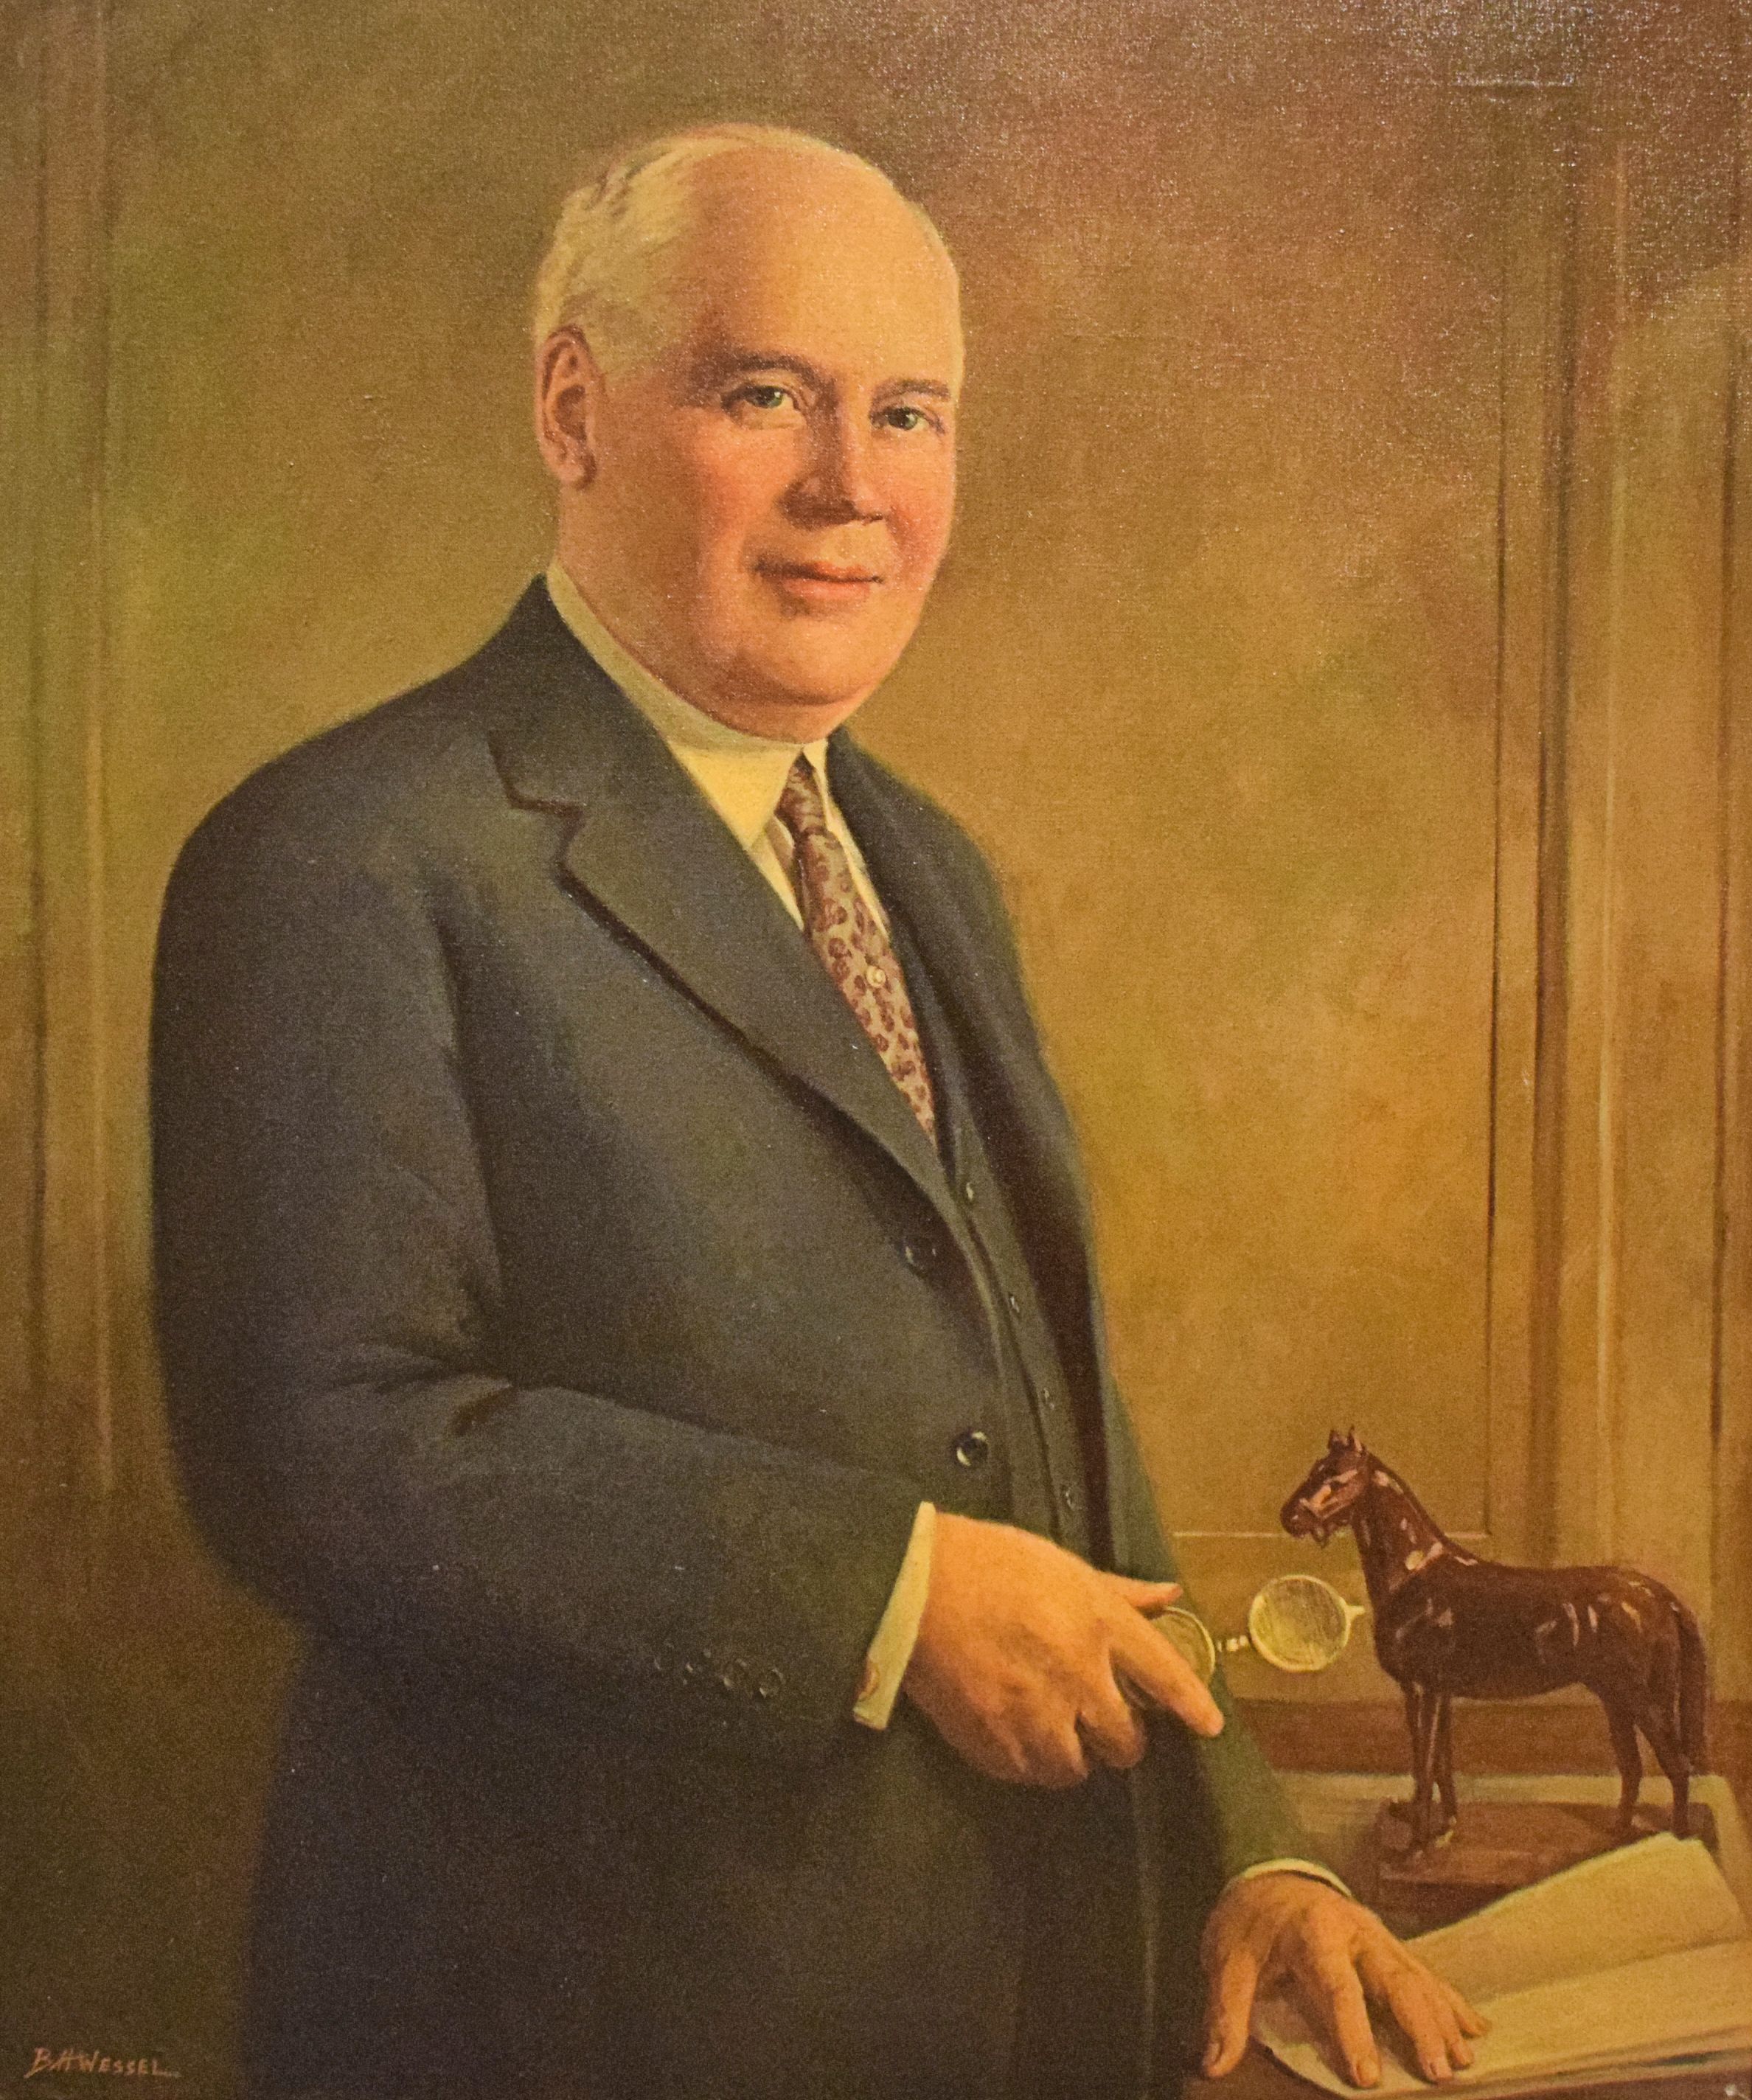 Portrait of Matt Winn by B. H. Wessel, 1935 (Museum Collection)